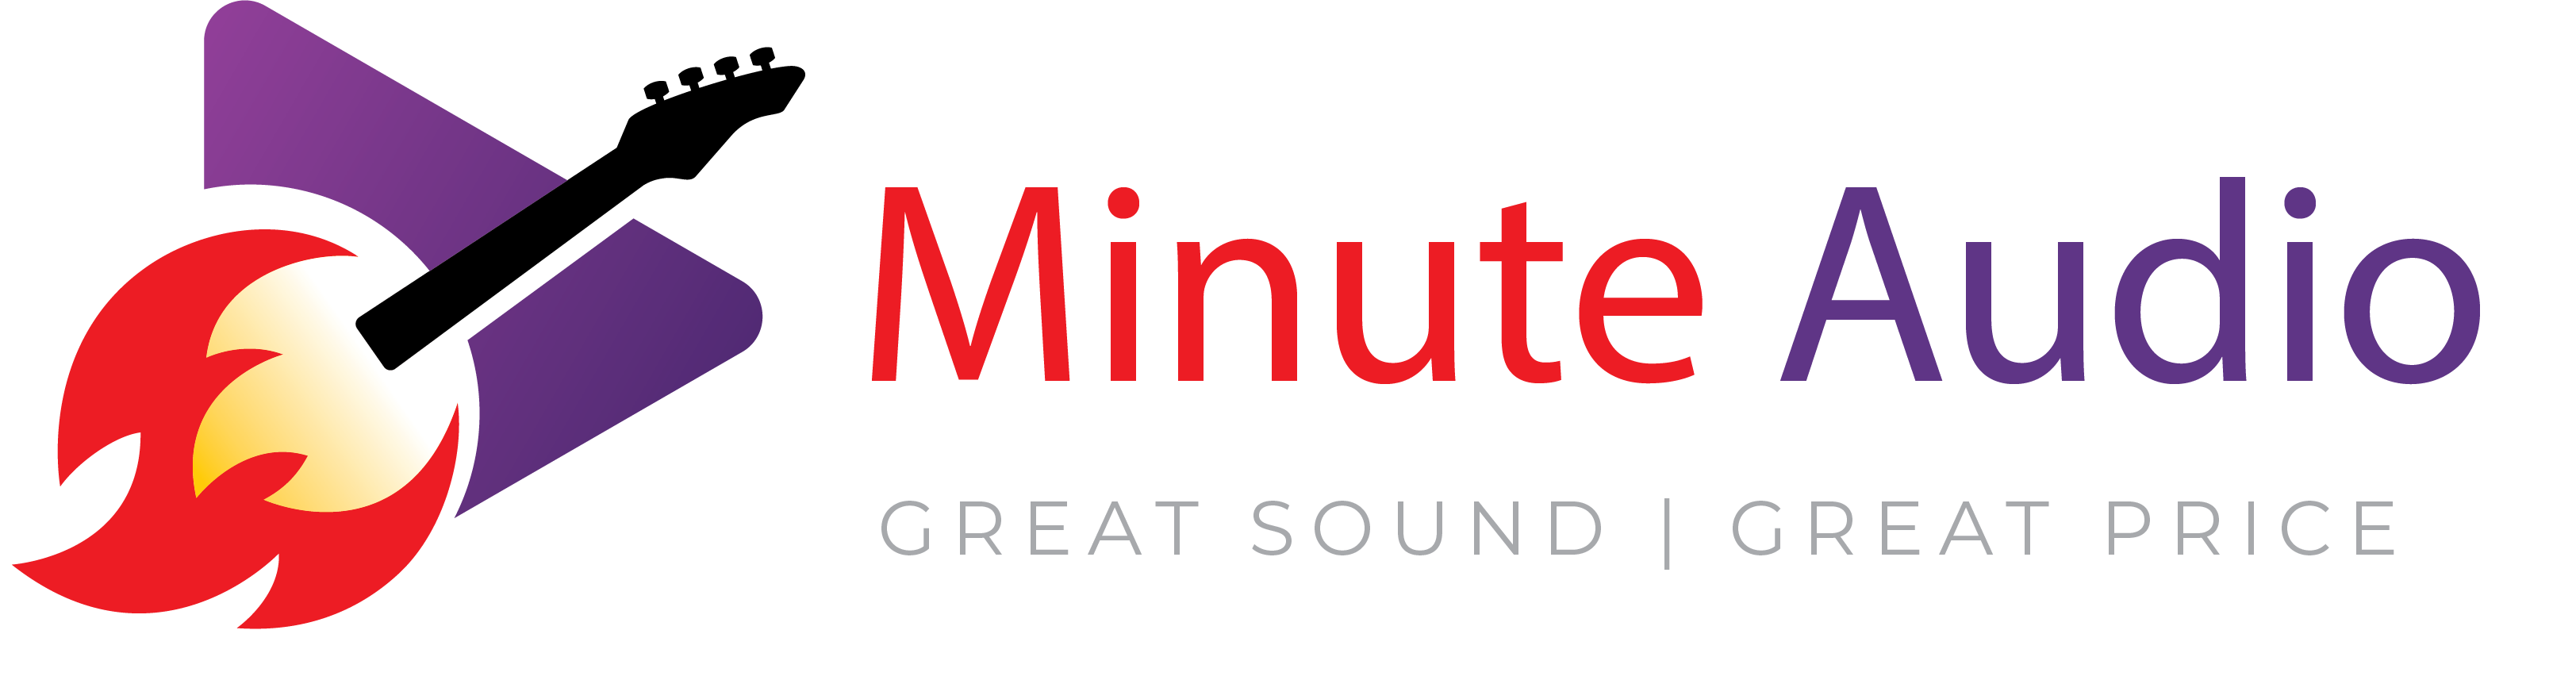 MinuteAudio